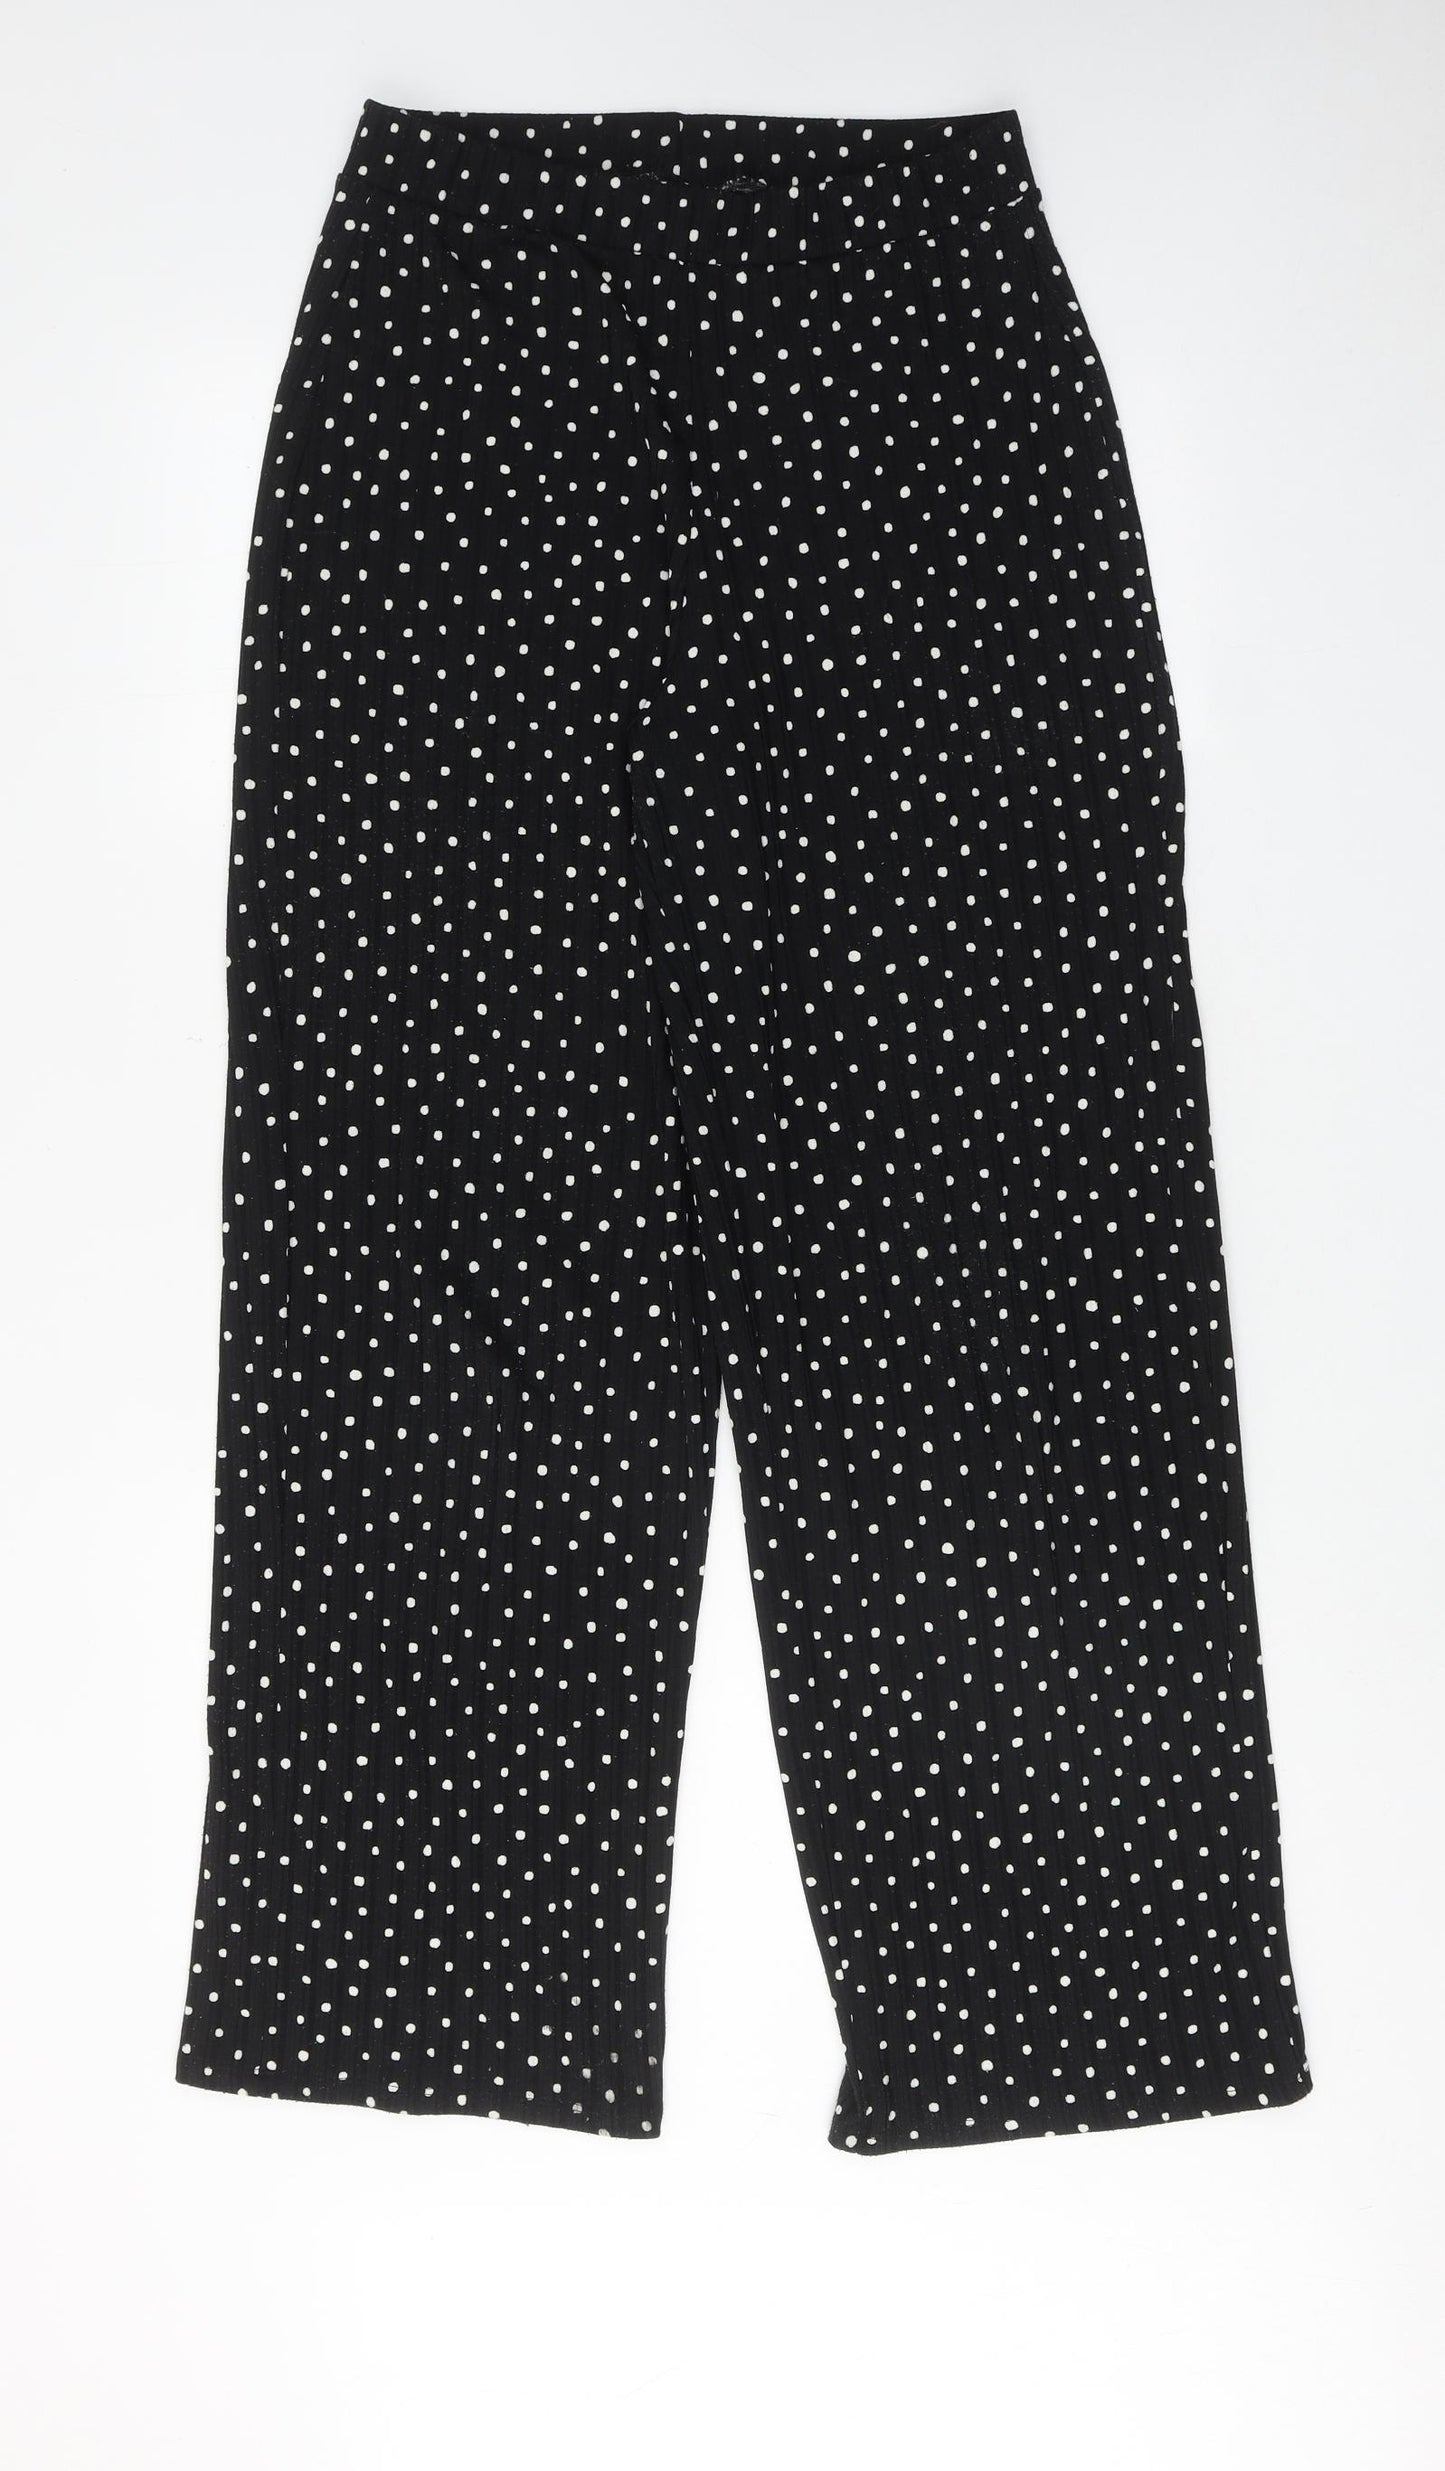 Monki Womens Black Polka Dot Polyester Trousers Size M L30 in Regular